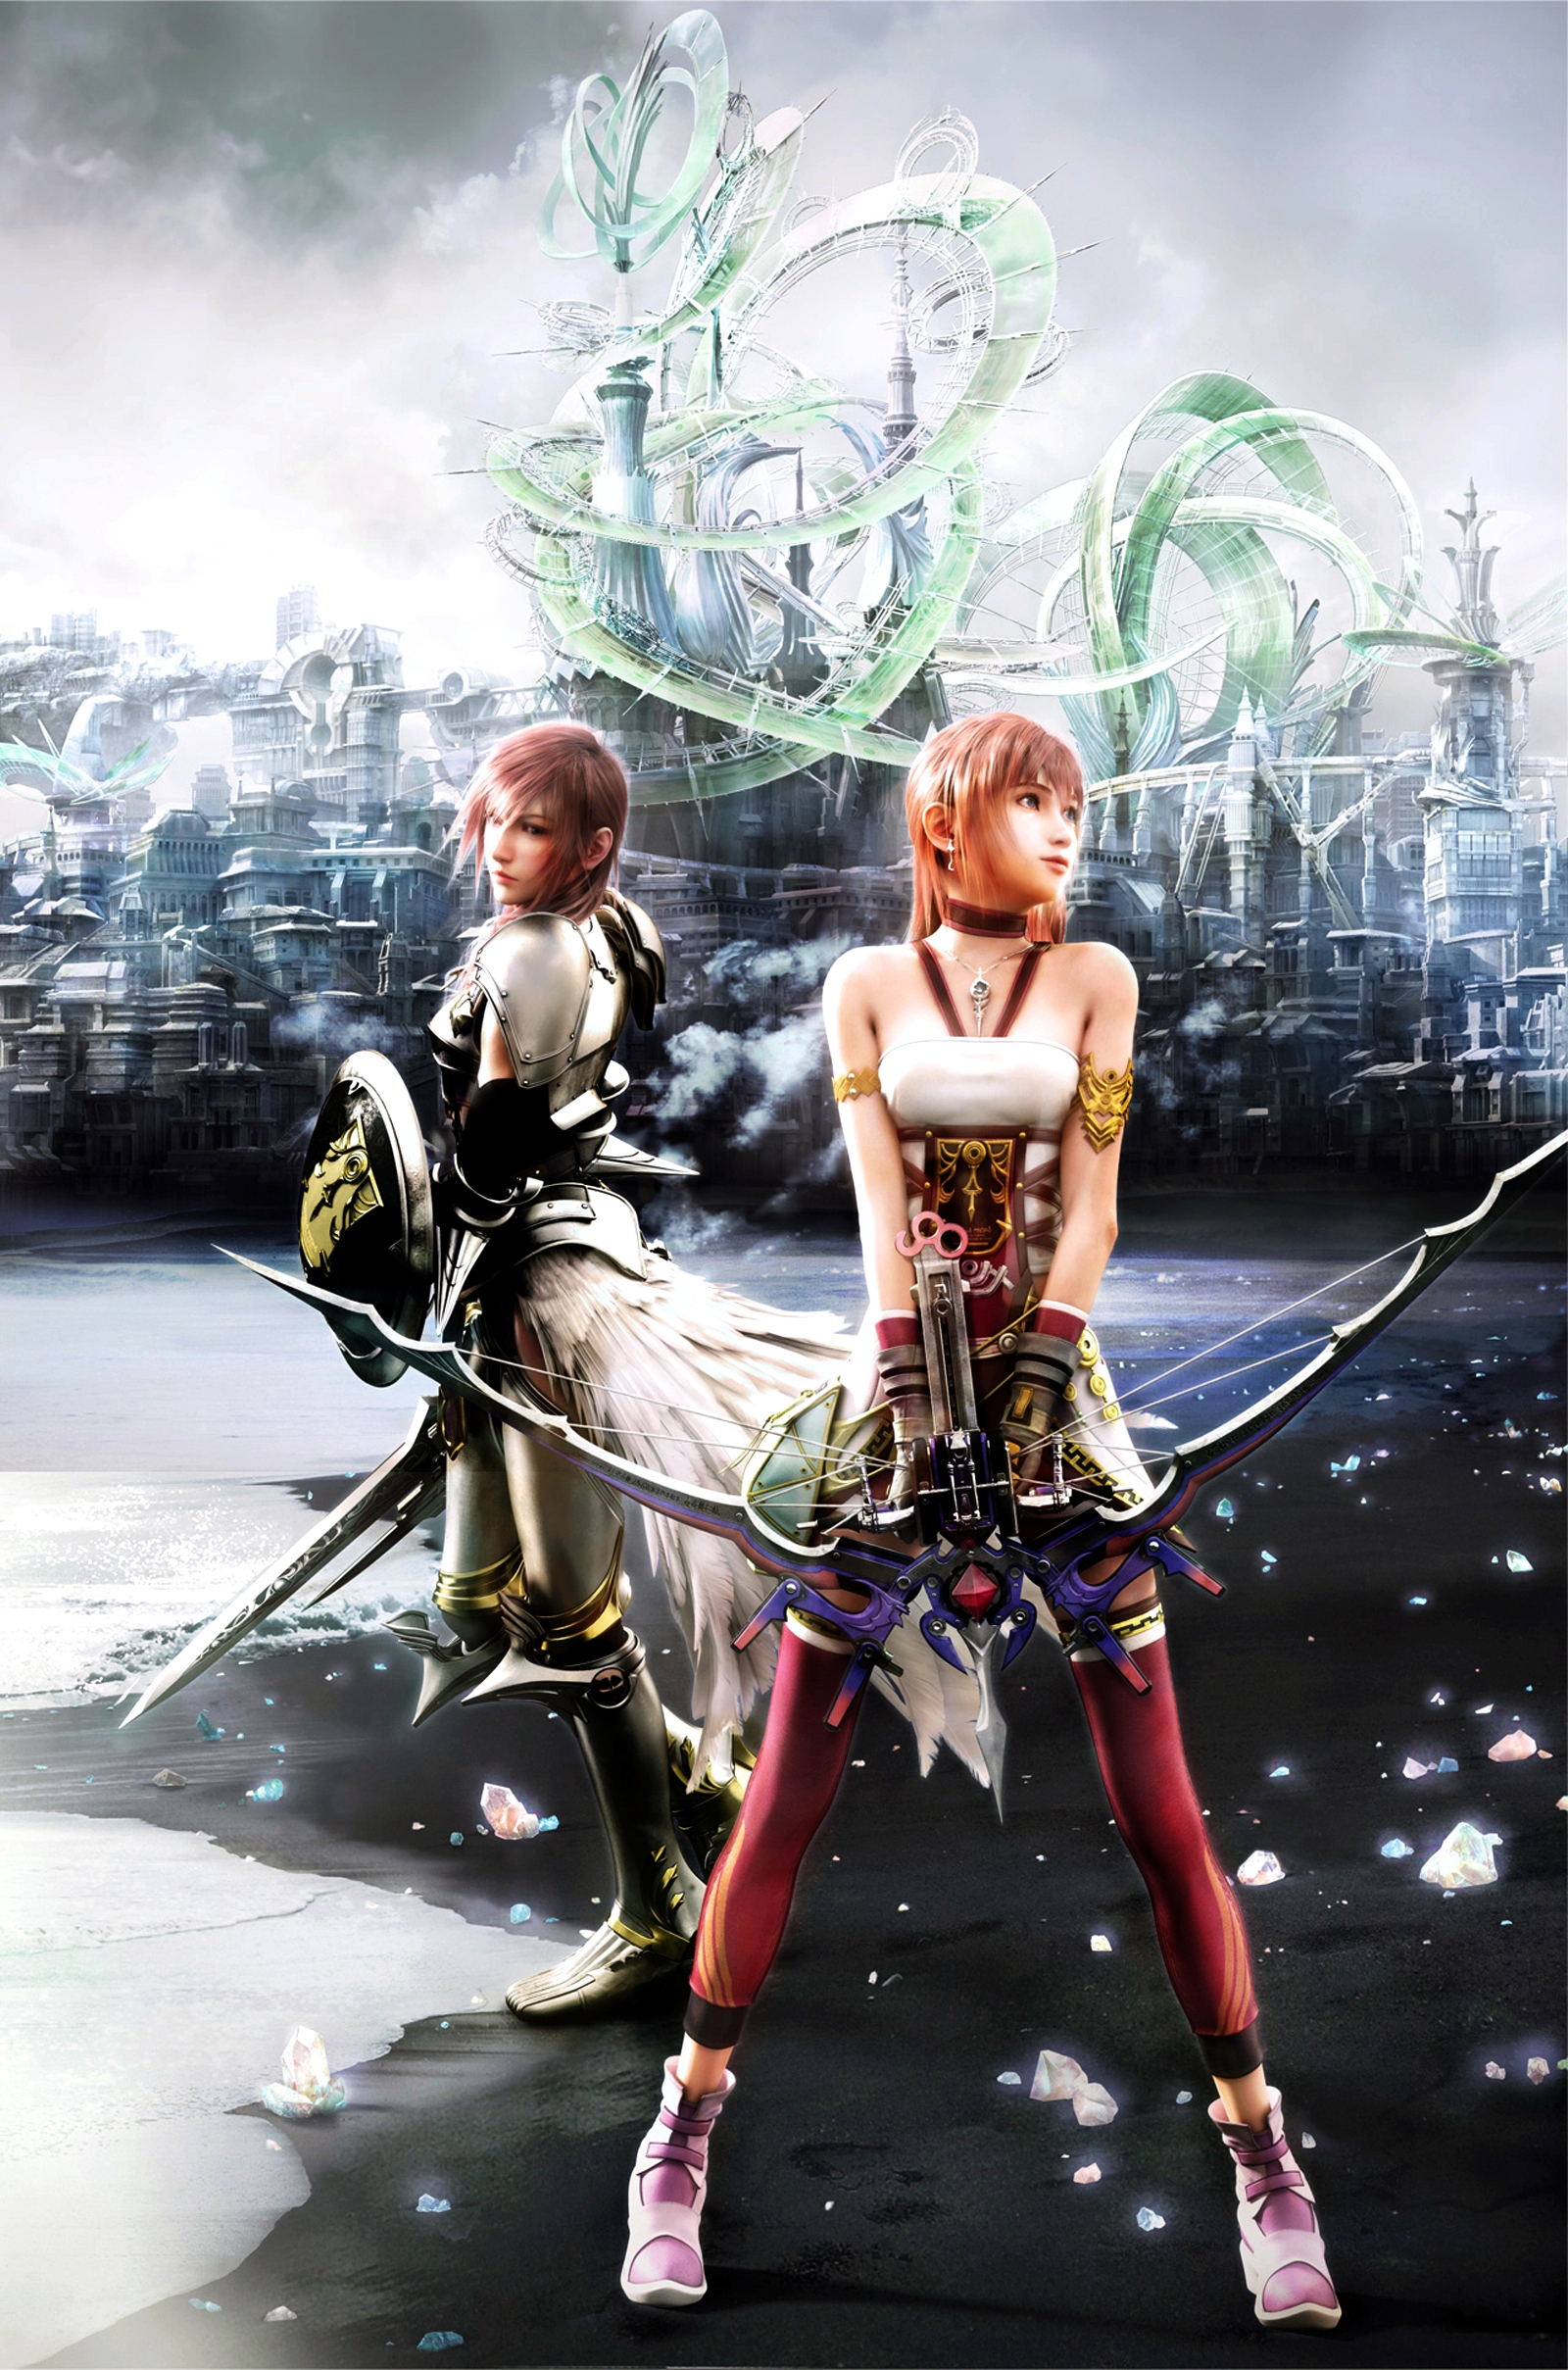 Final Fantasy Xiii 2 Final Fantasy Wiki Fandom